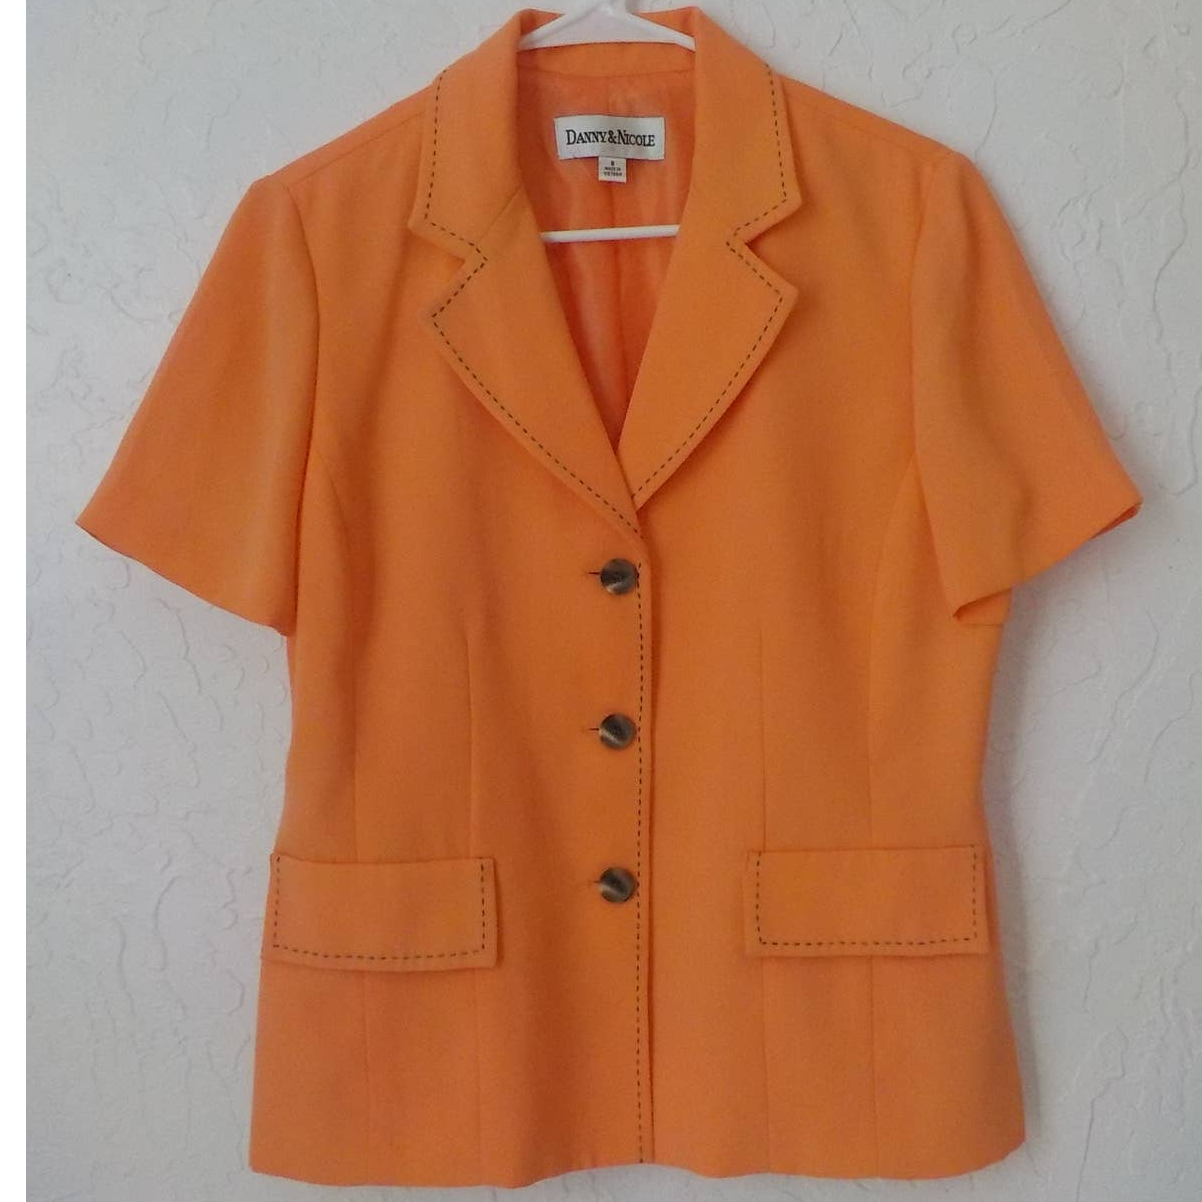 Primary image for Danny & Nicole Orange Top Short Sleeve Blazer Women size 8 Button Up Stitches 